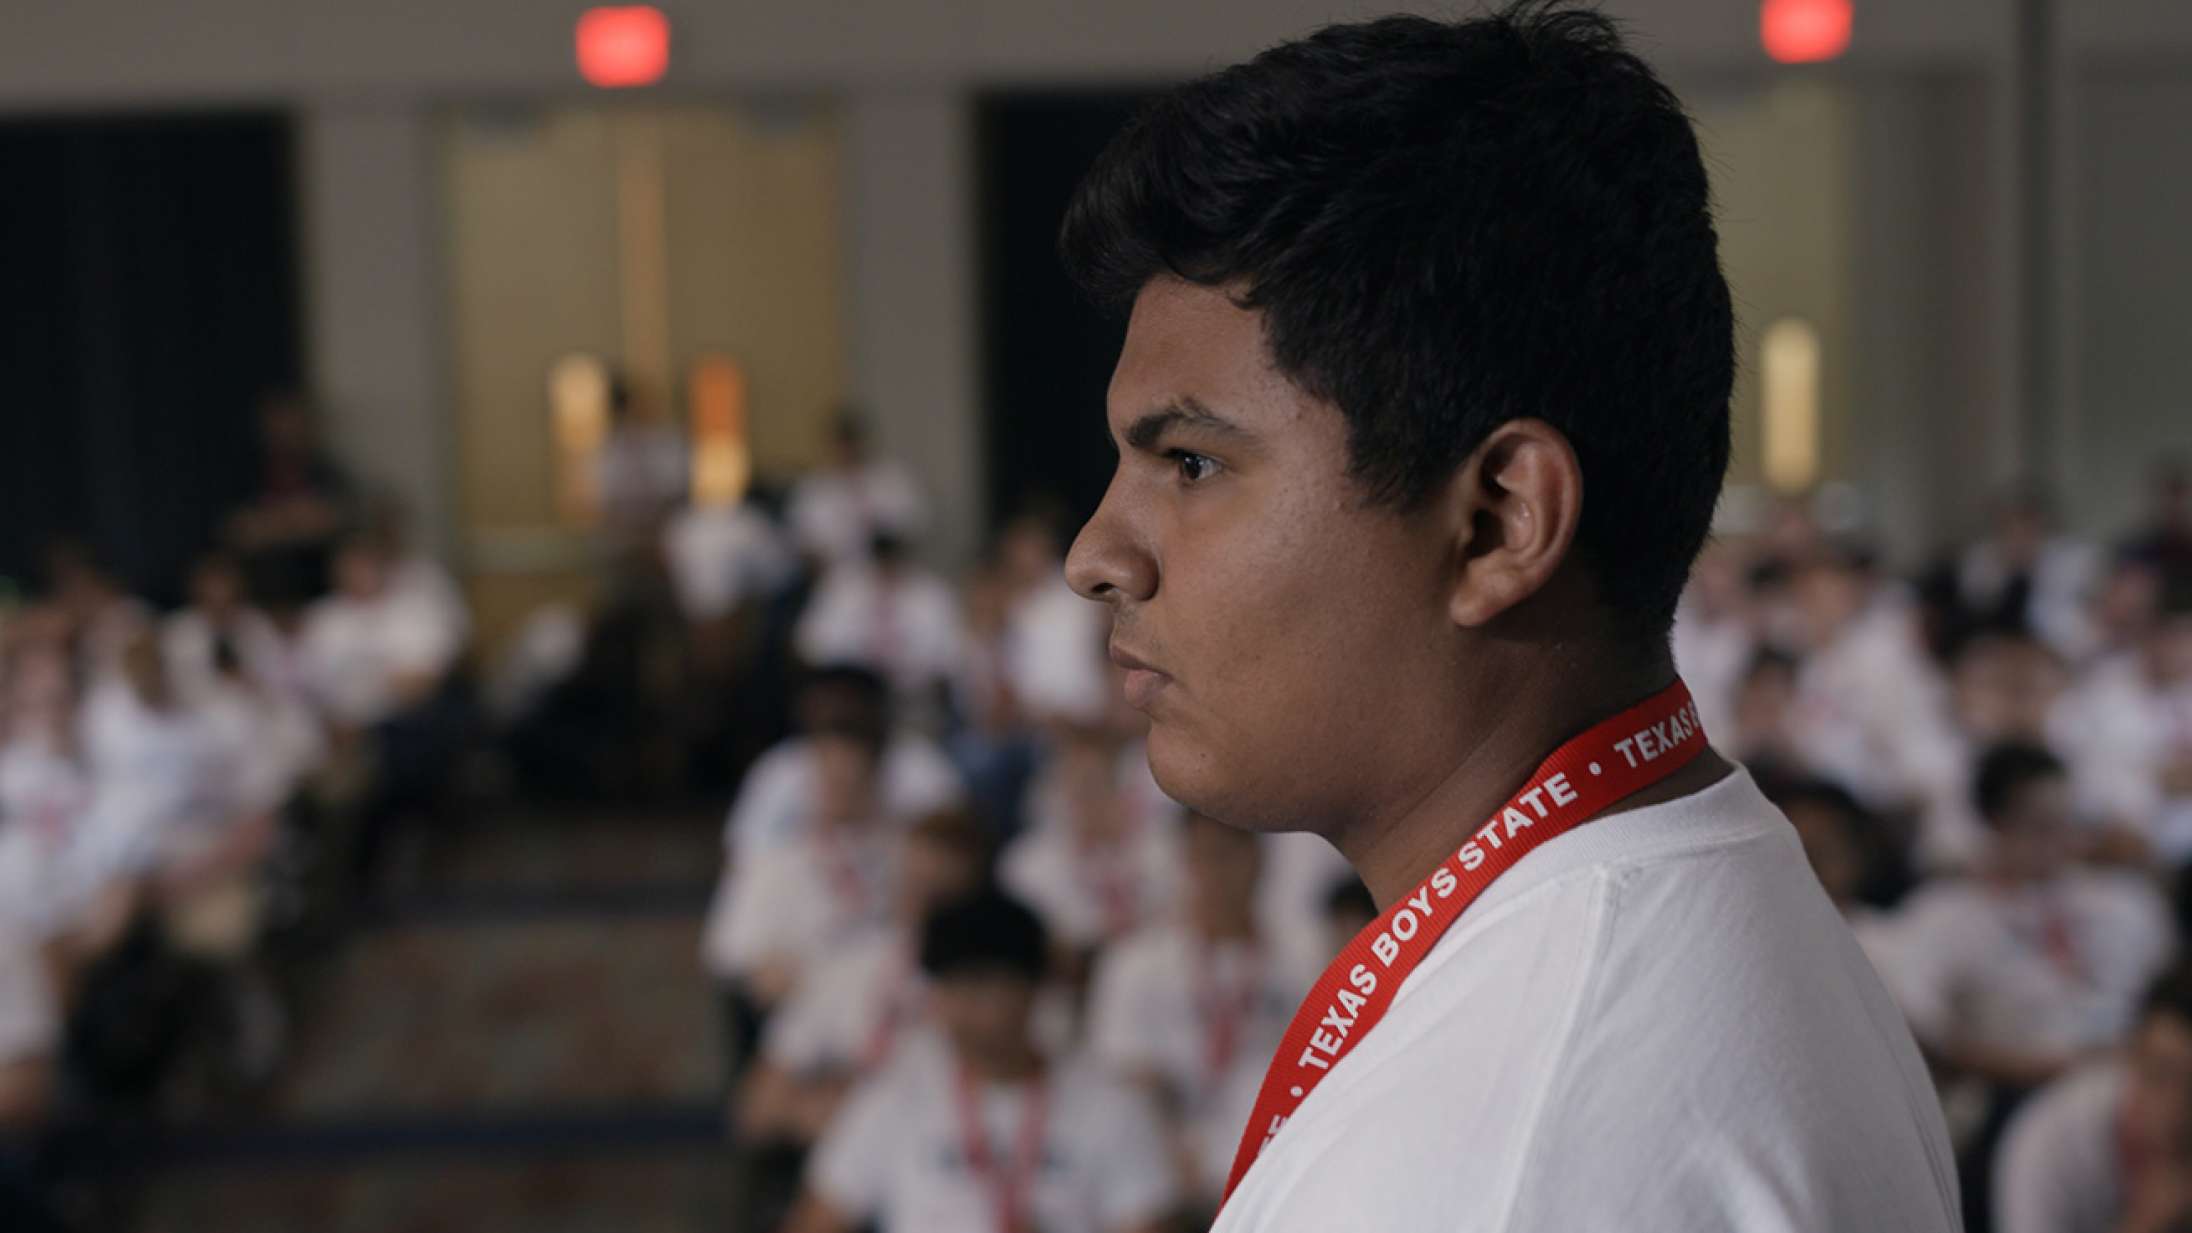 ’Boys State’: Sundance-vinder om politisk eksperiment på teenagedrenge er uhyre interessant